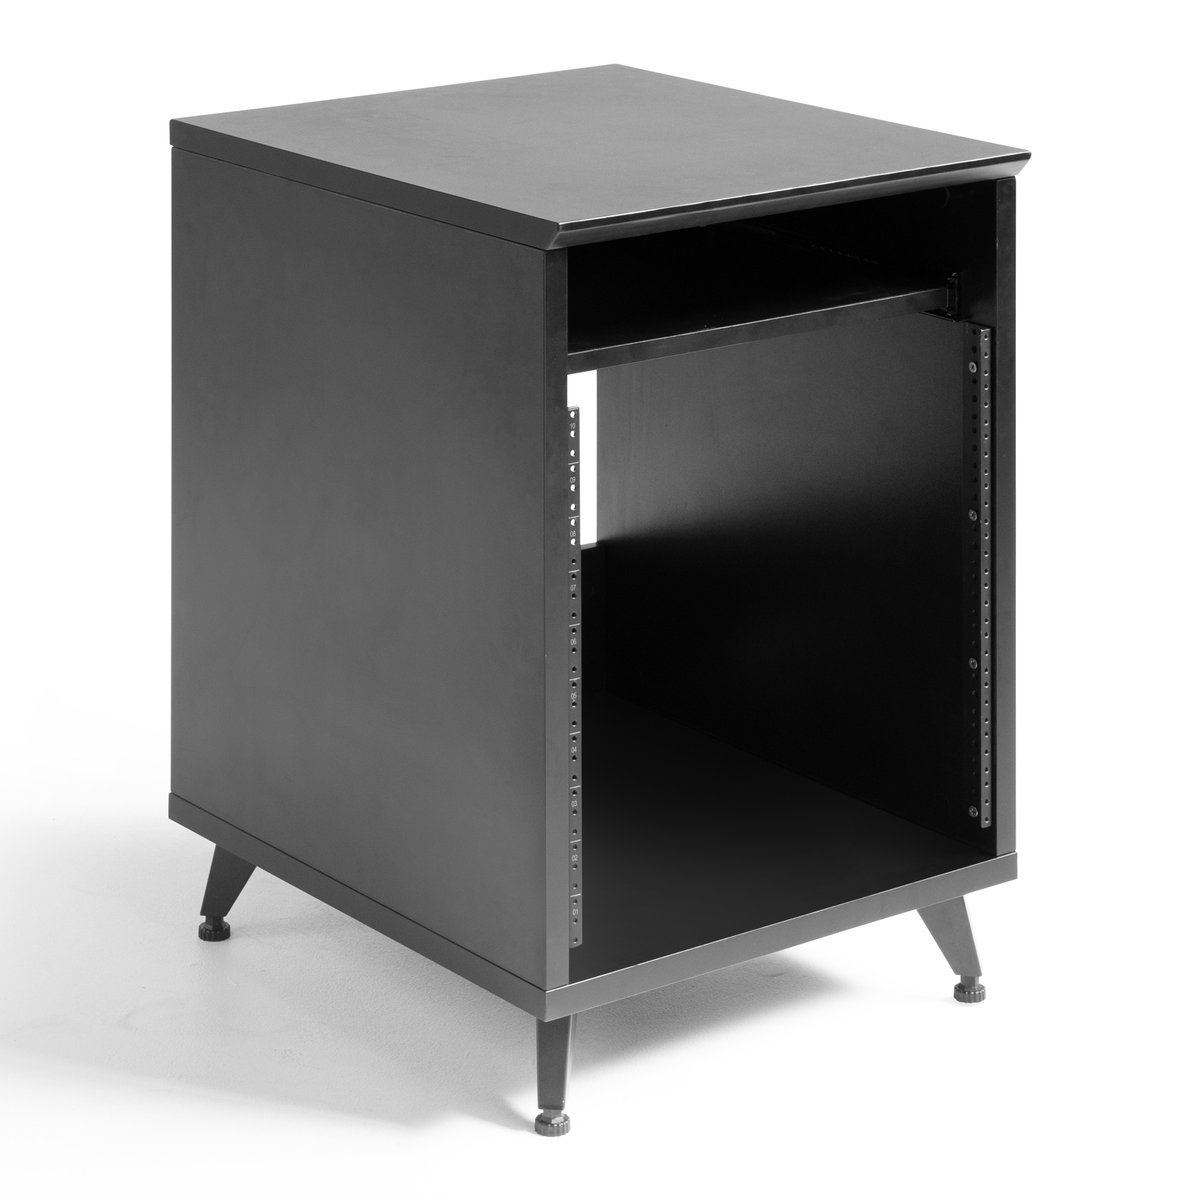 GFW-ELITEDESKRK-BLK Elite Series Furniture Desk 10U Rack – Black